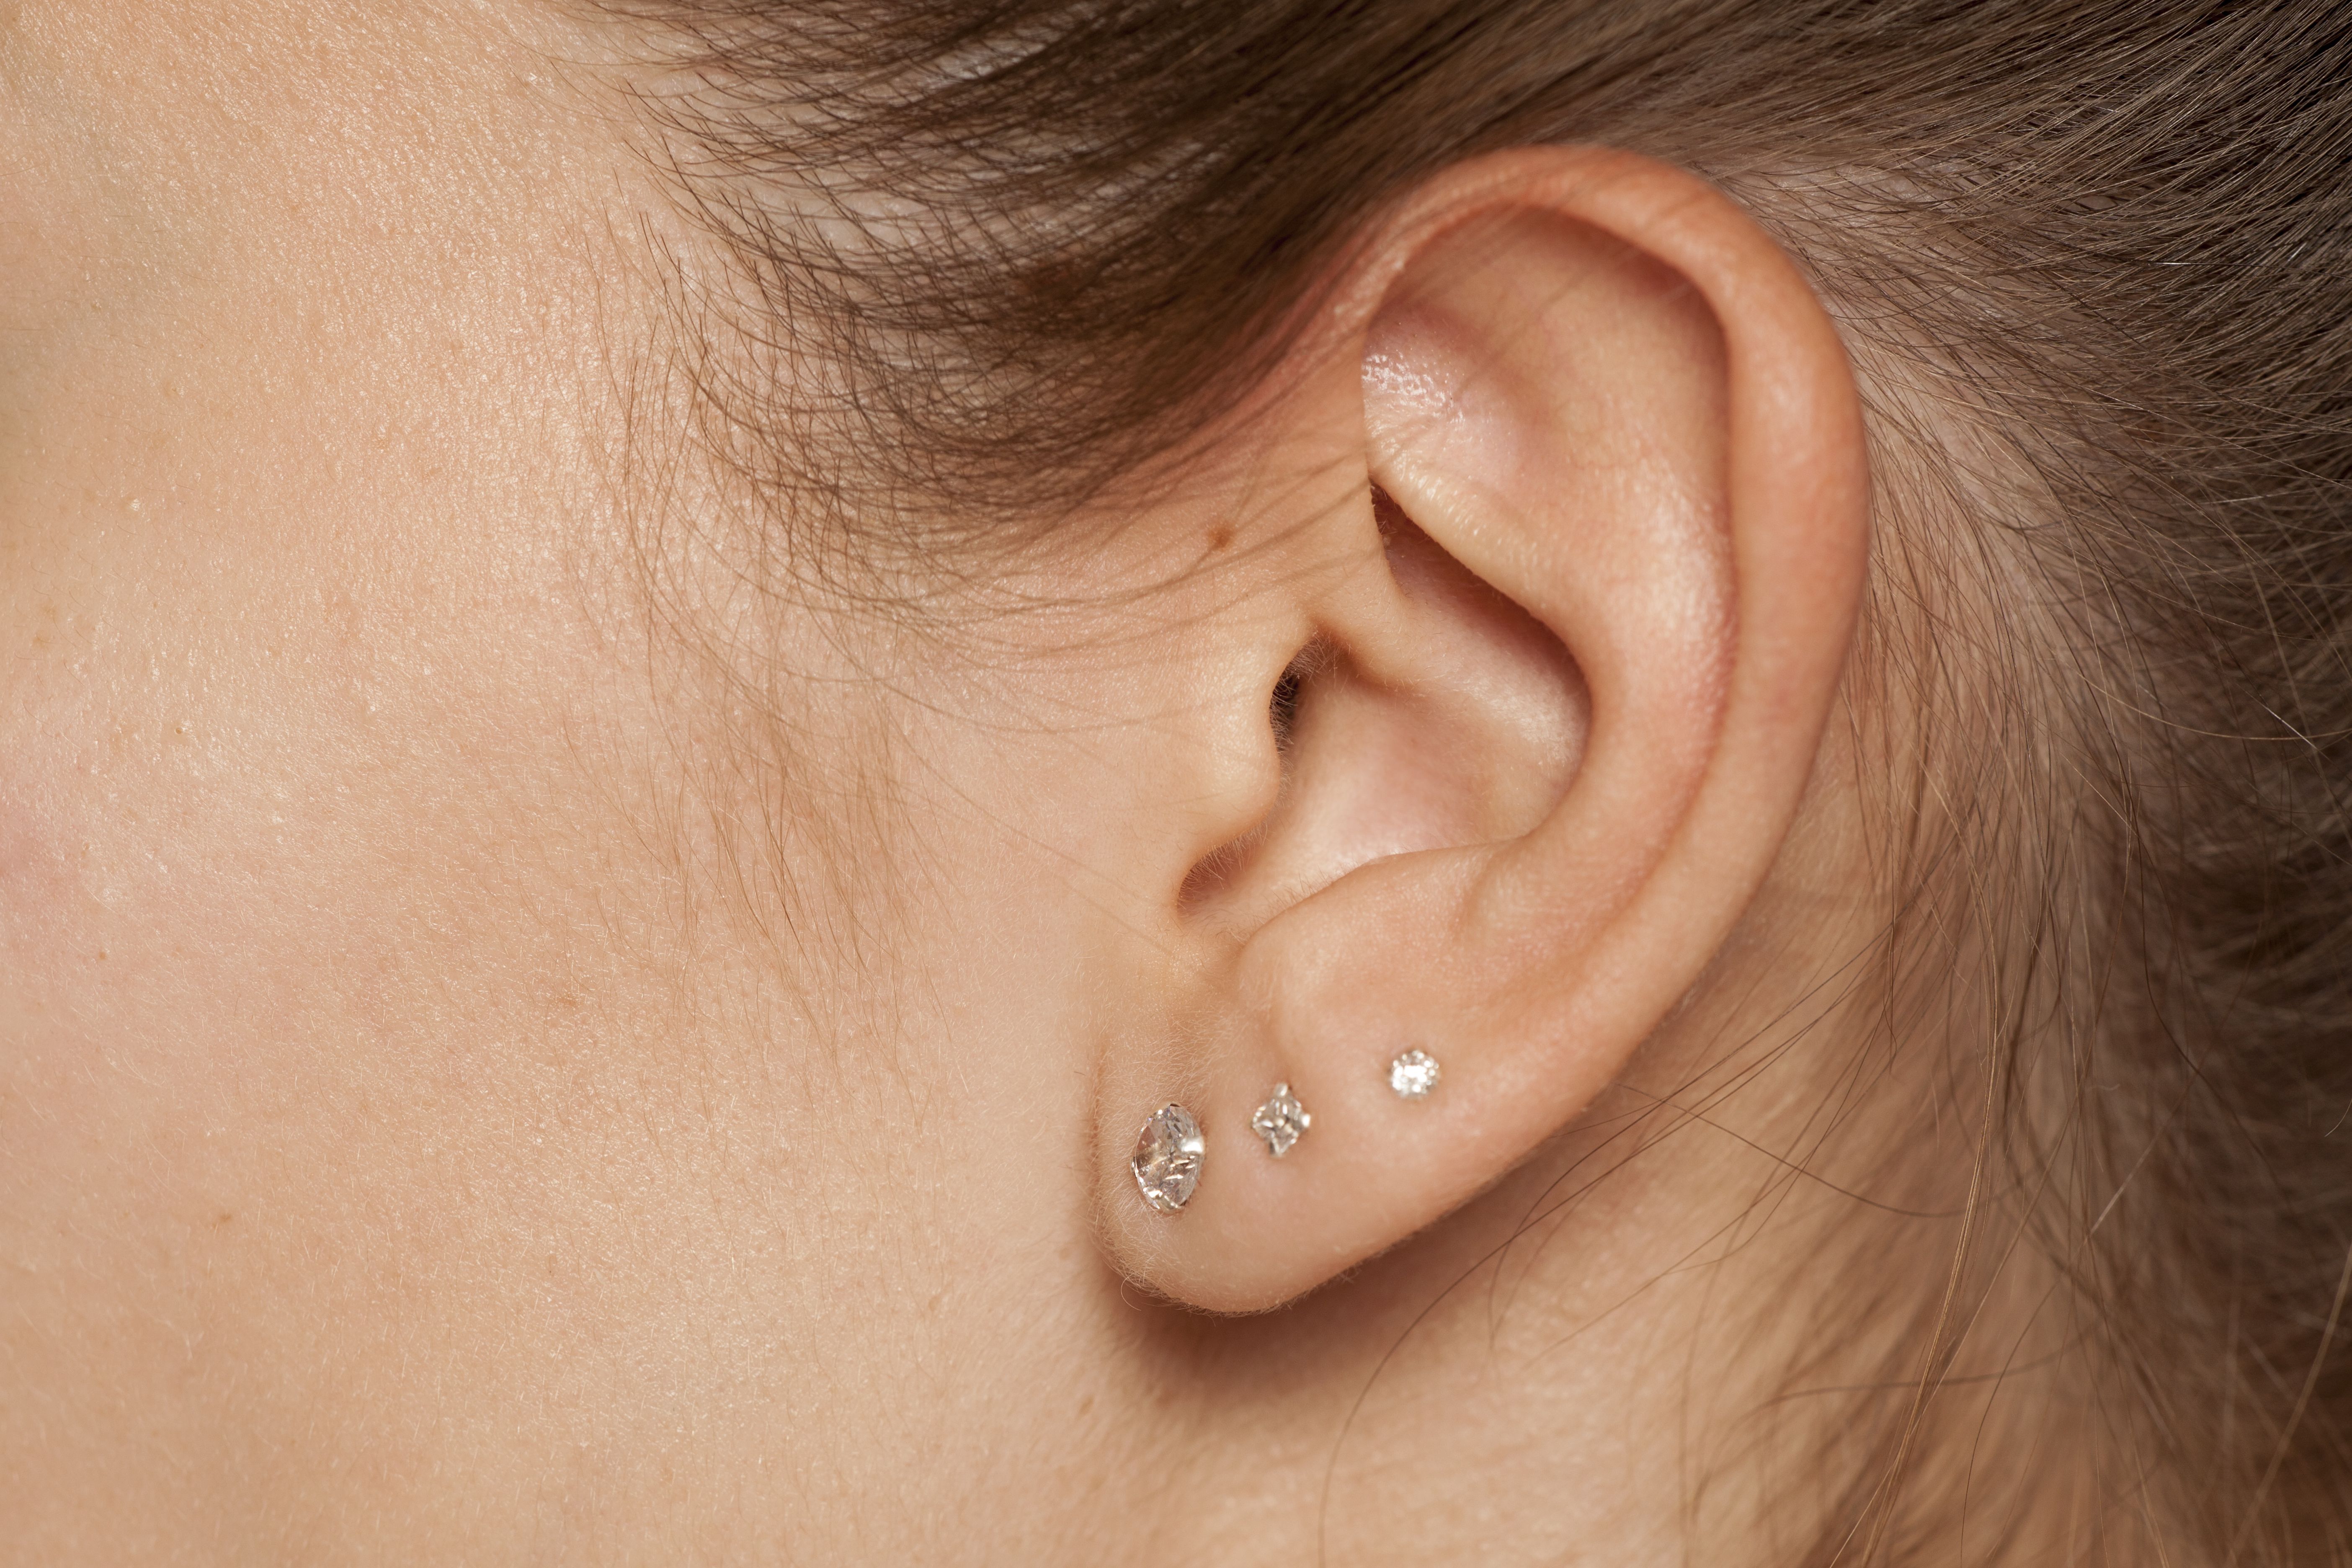 Ear Eczema: Symptoms, Causes & Treatment